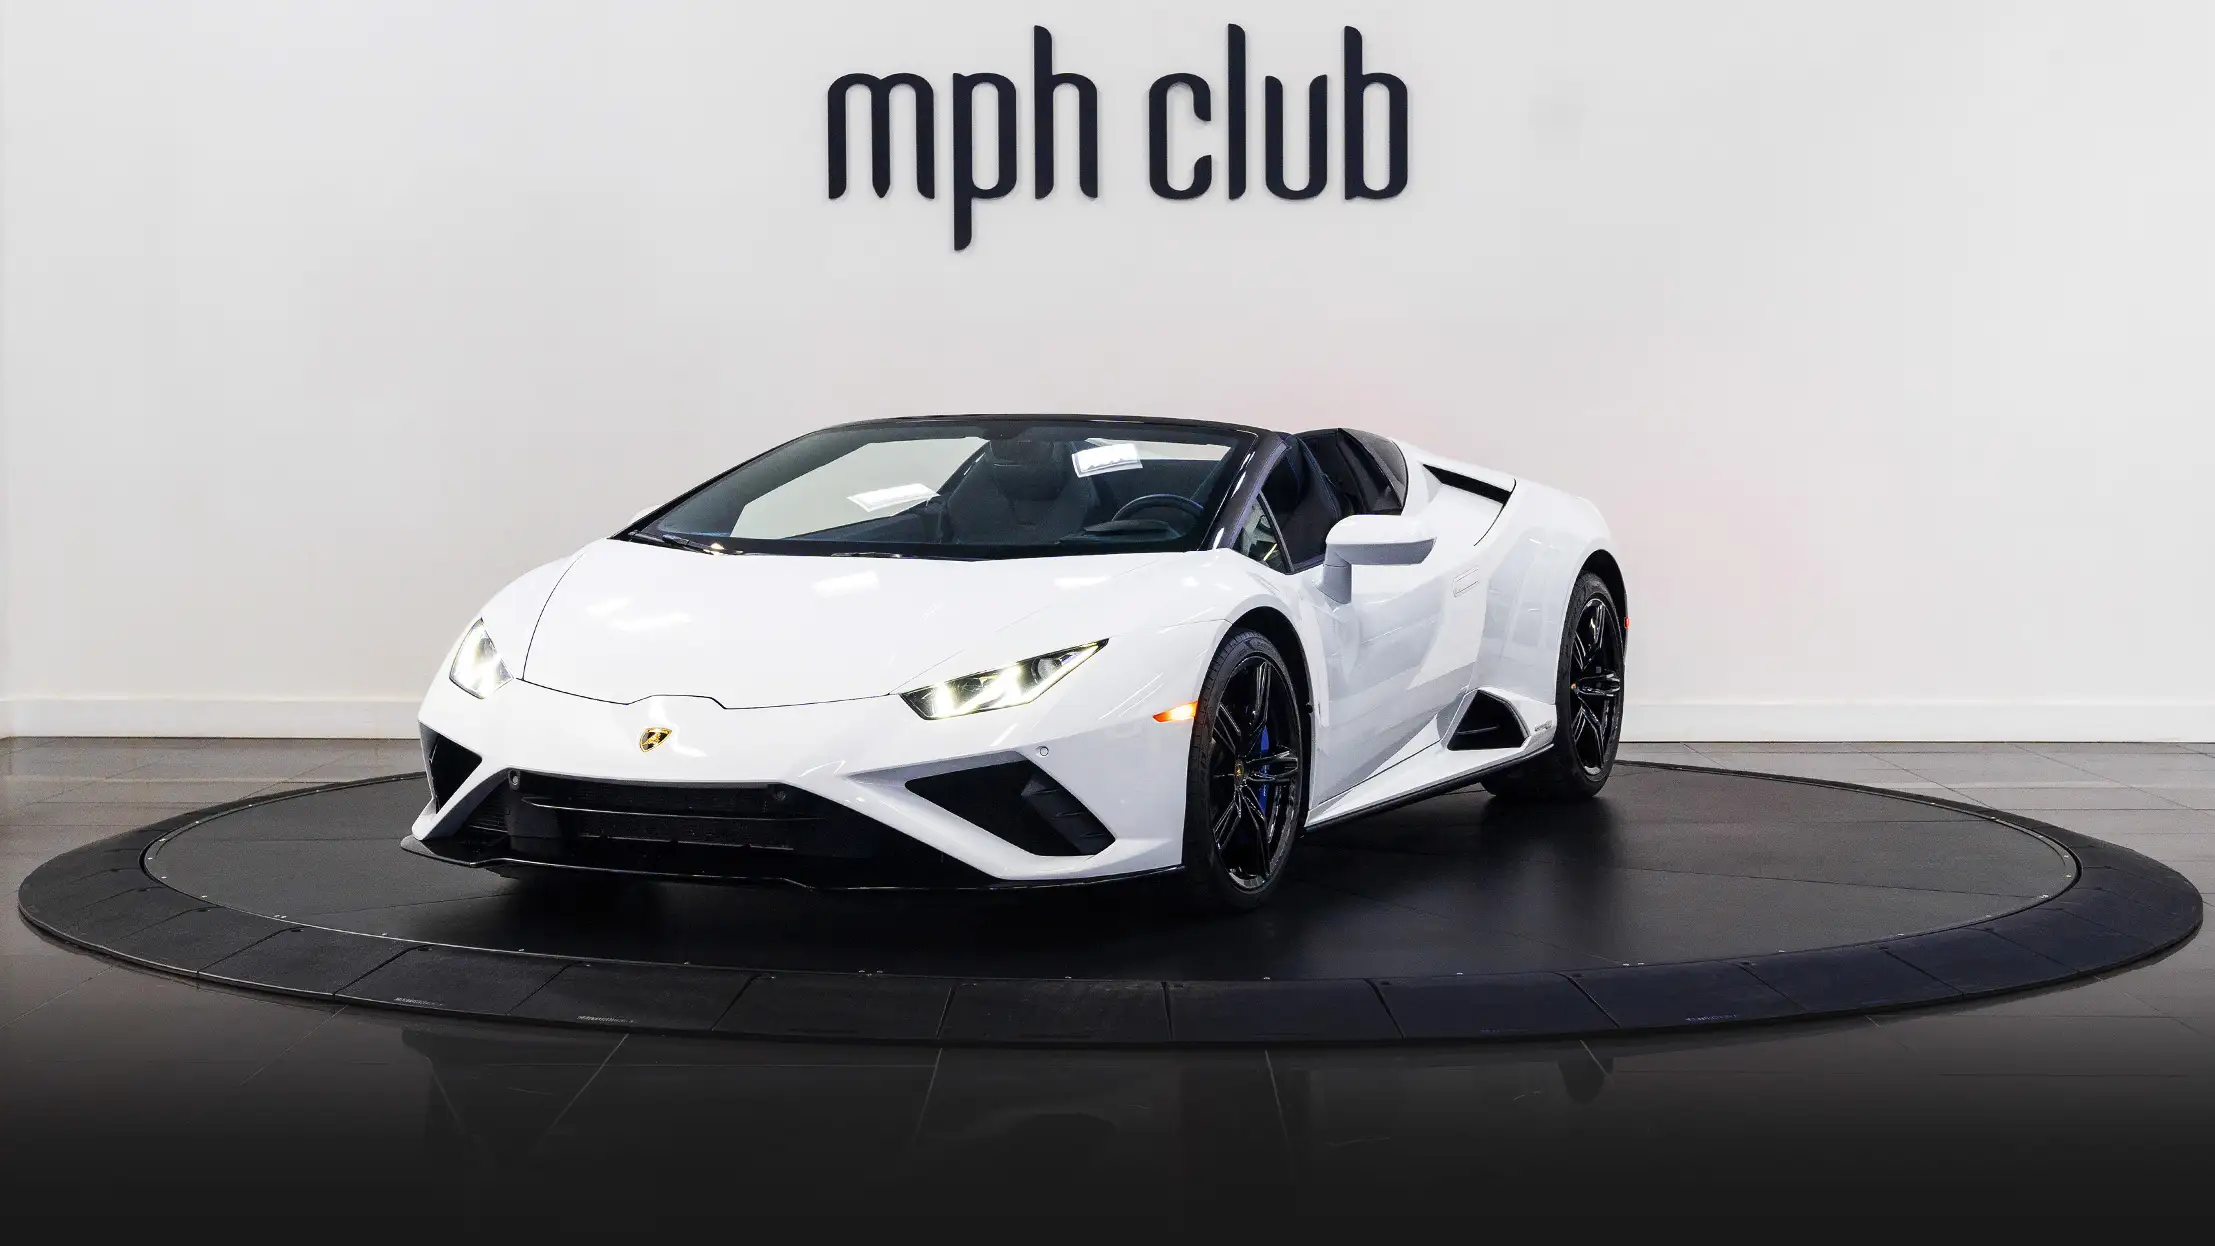 White Lamborghini Huracan Evo rental profile view mph club